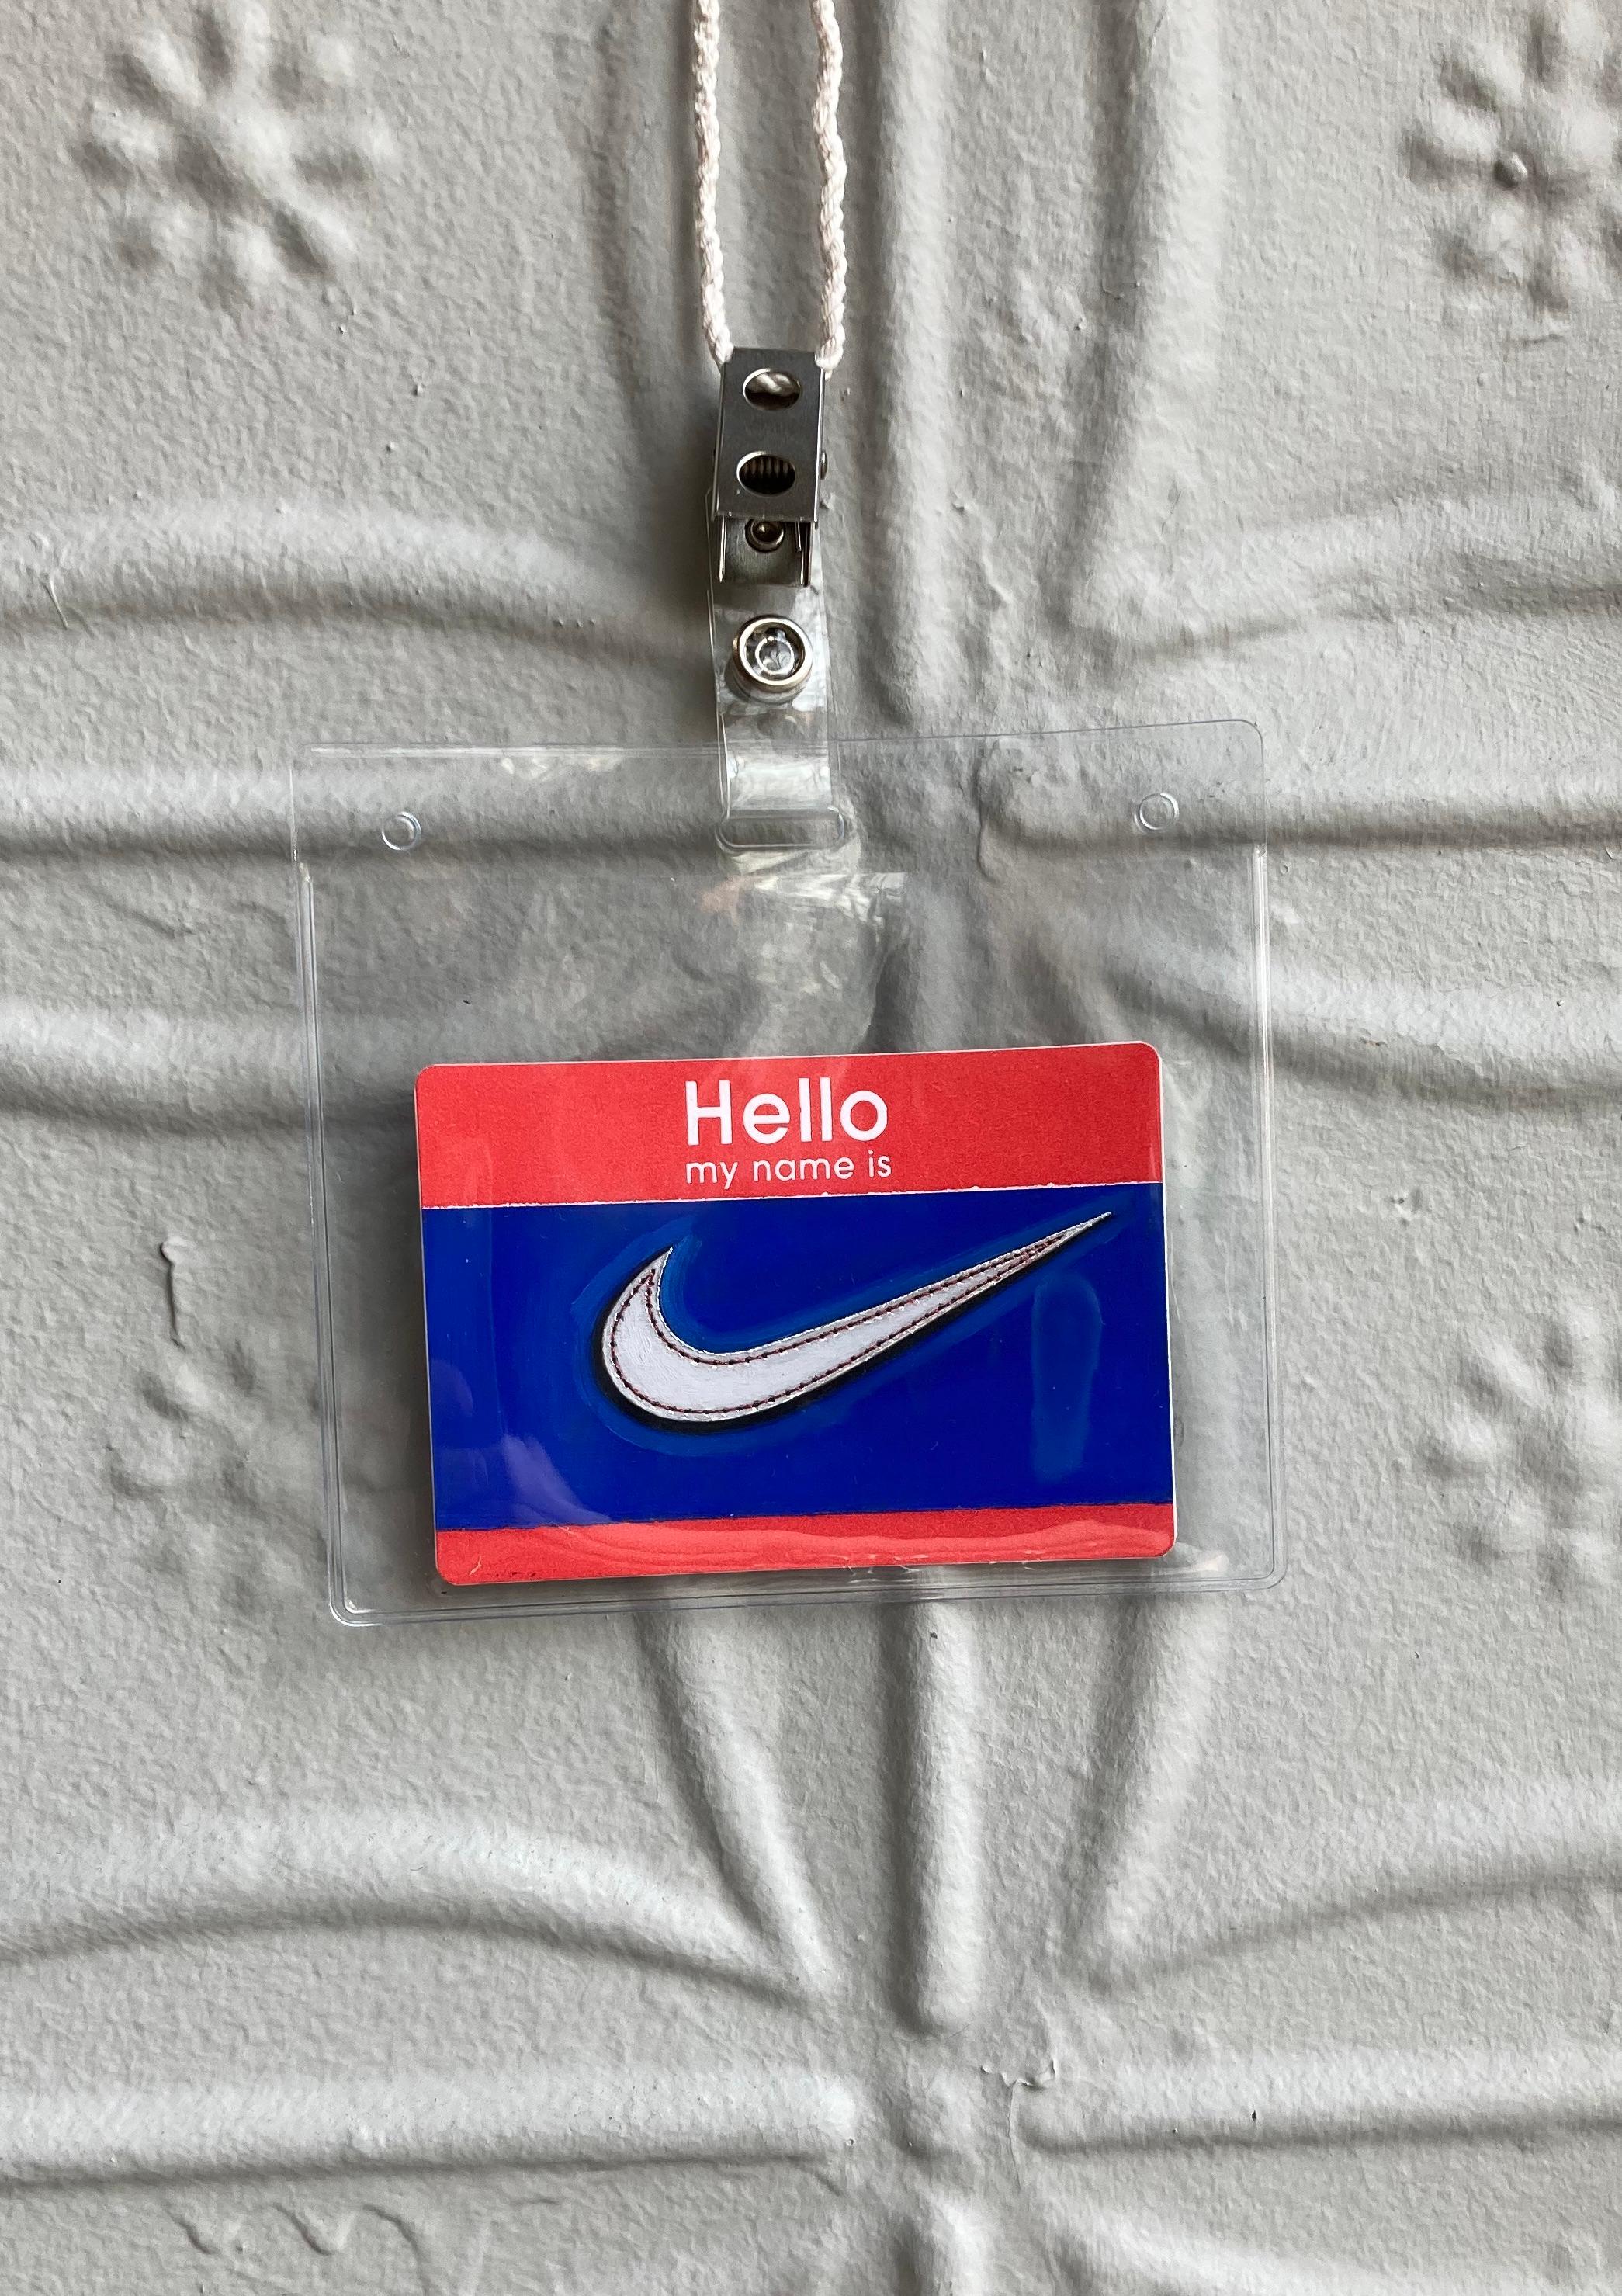 Hallo, mein Name ist: Nike - Miniatur-Piktogramm auf Papier – Painting von Anthony Mastromatteo